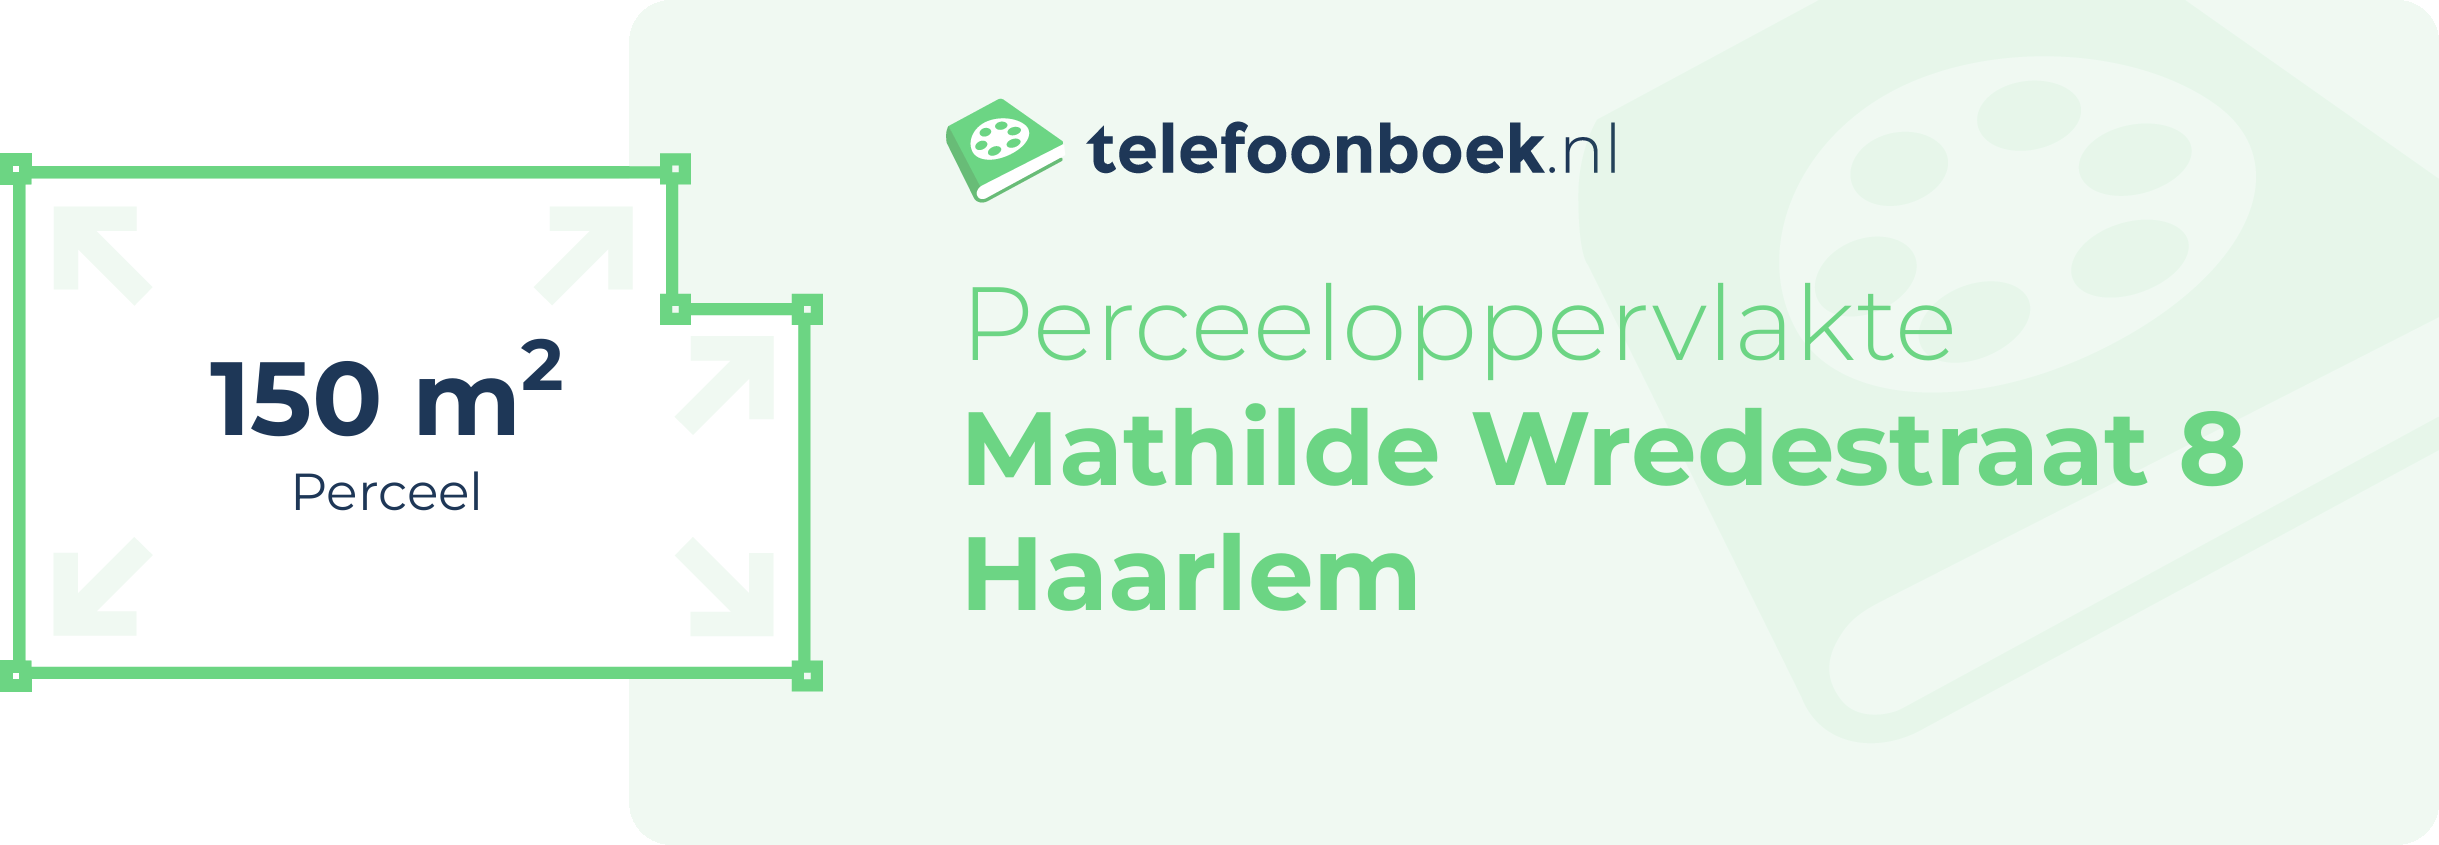 Perceeloppervlakte Mathilde Wredestraat 8 Haarlem